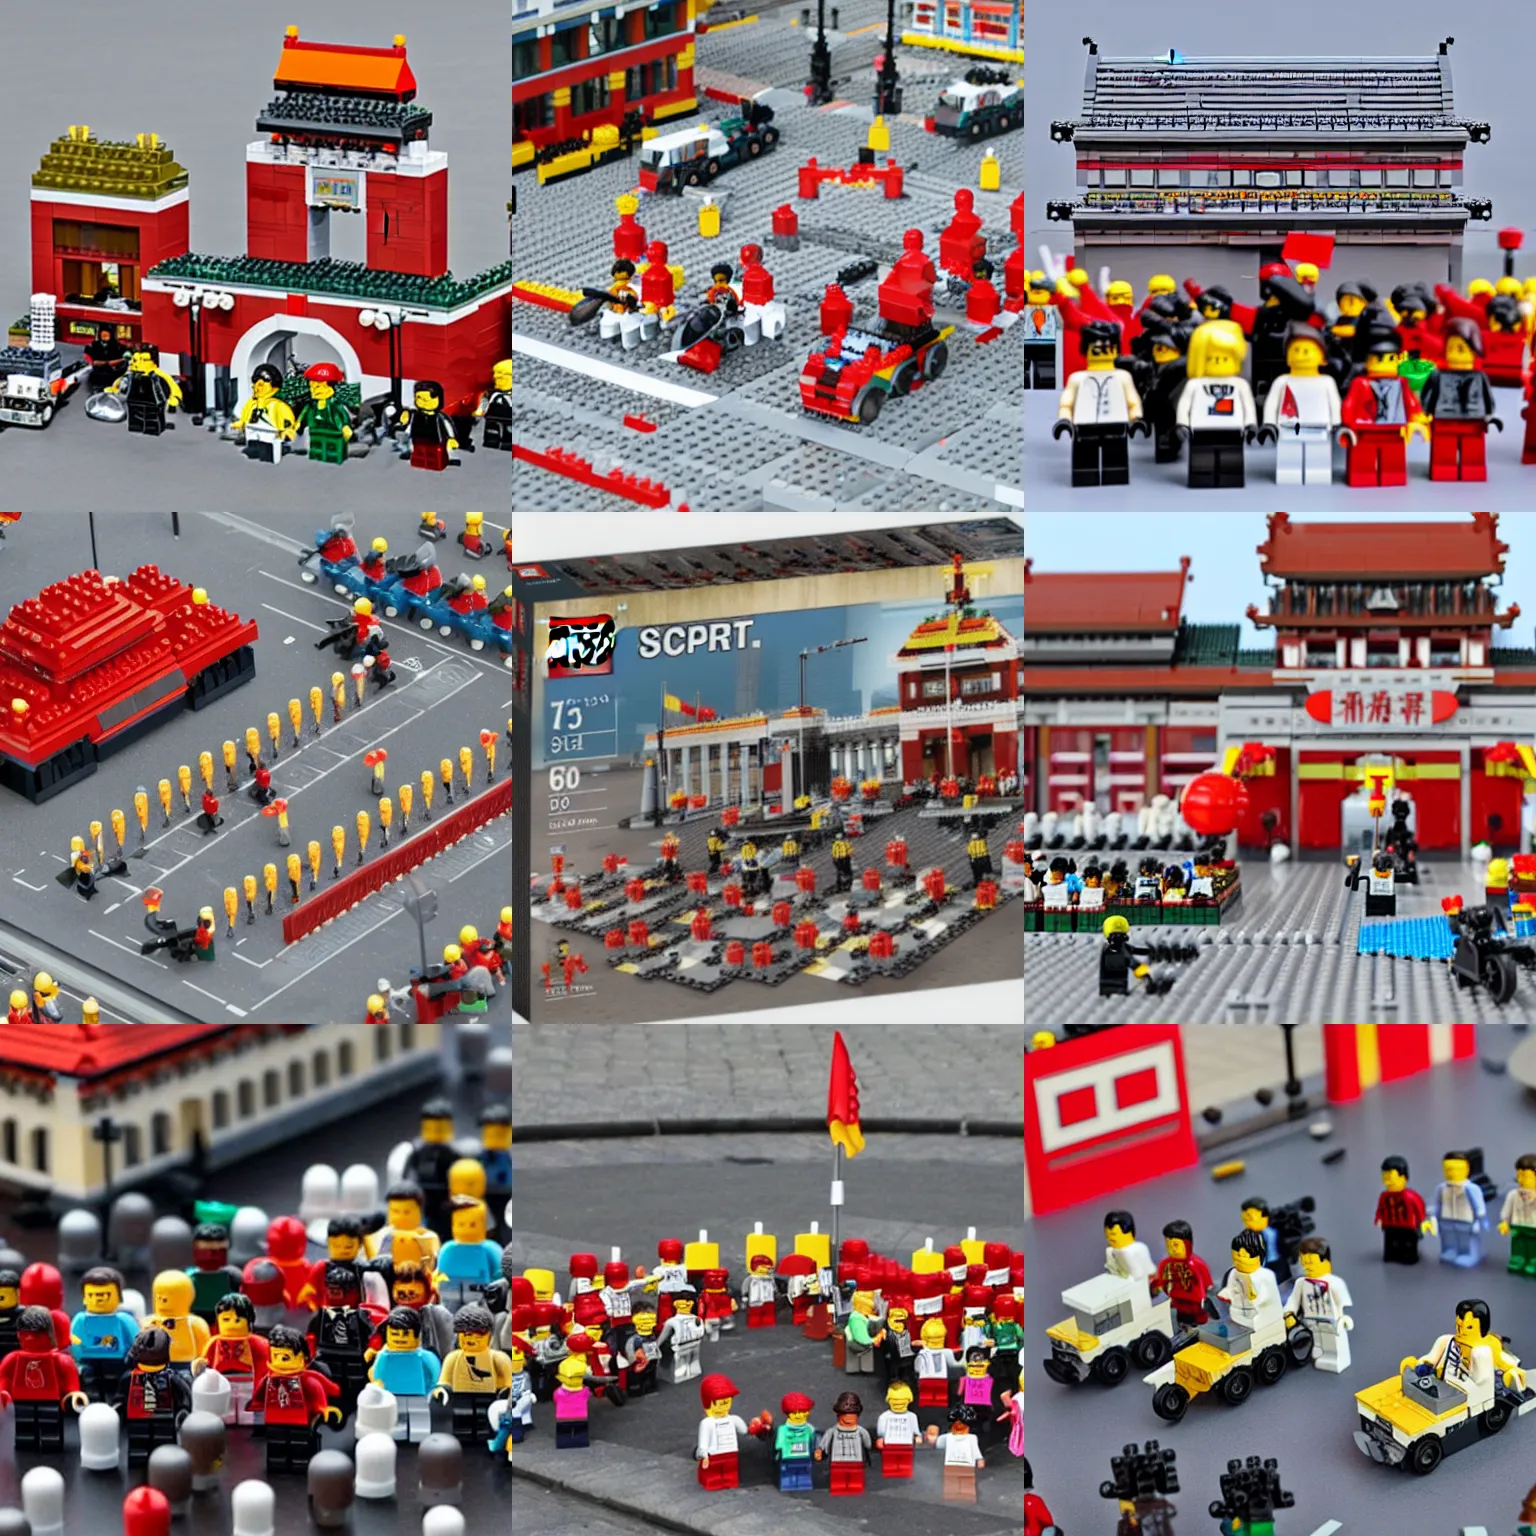 Prompt: tiananmen square protest lego set